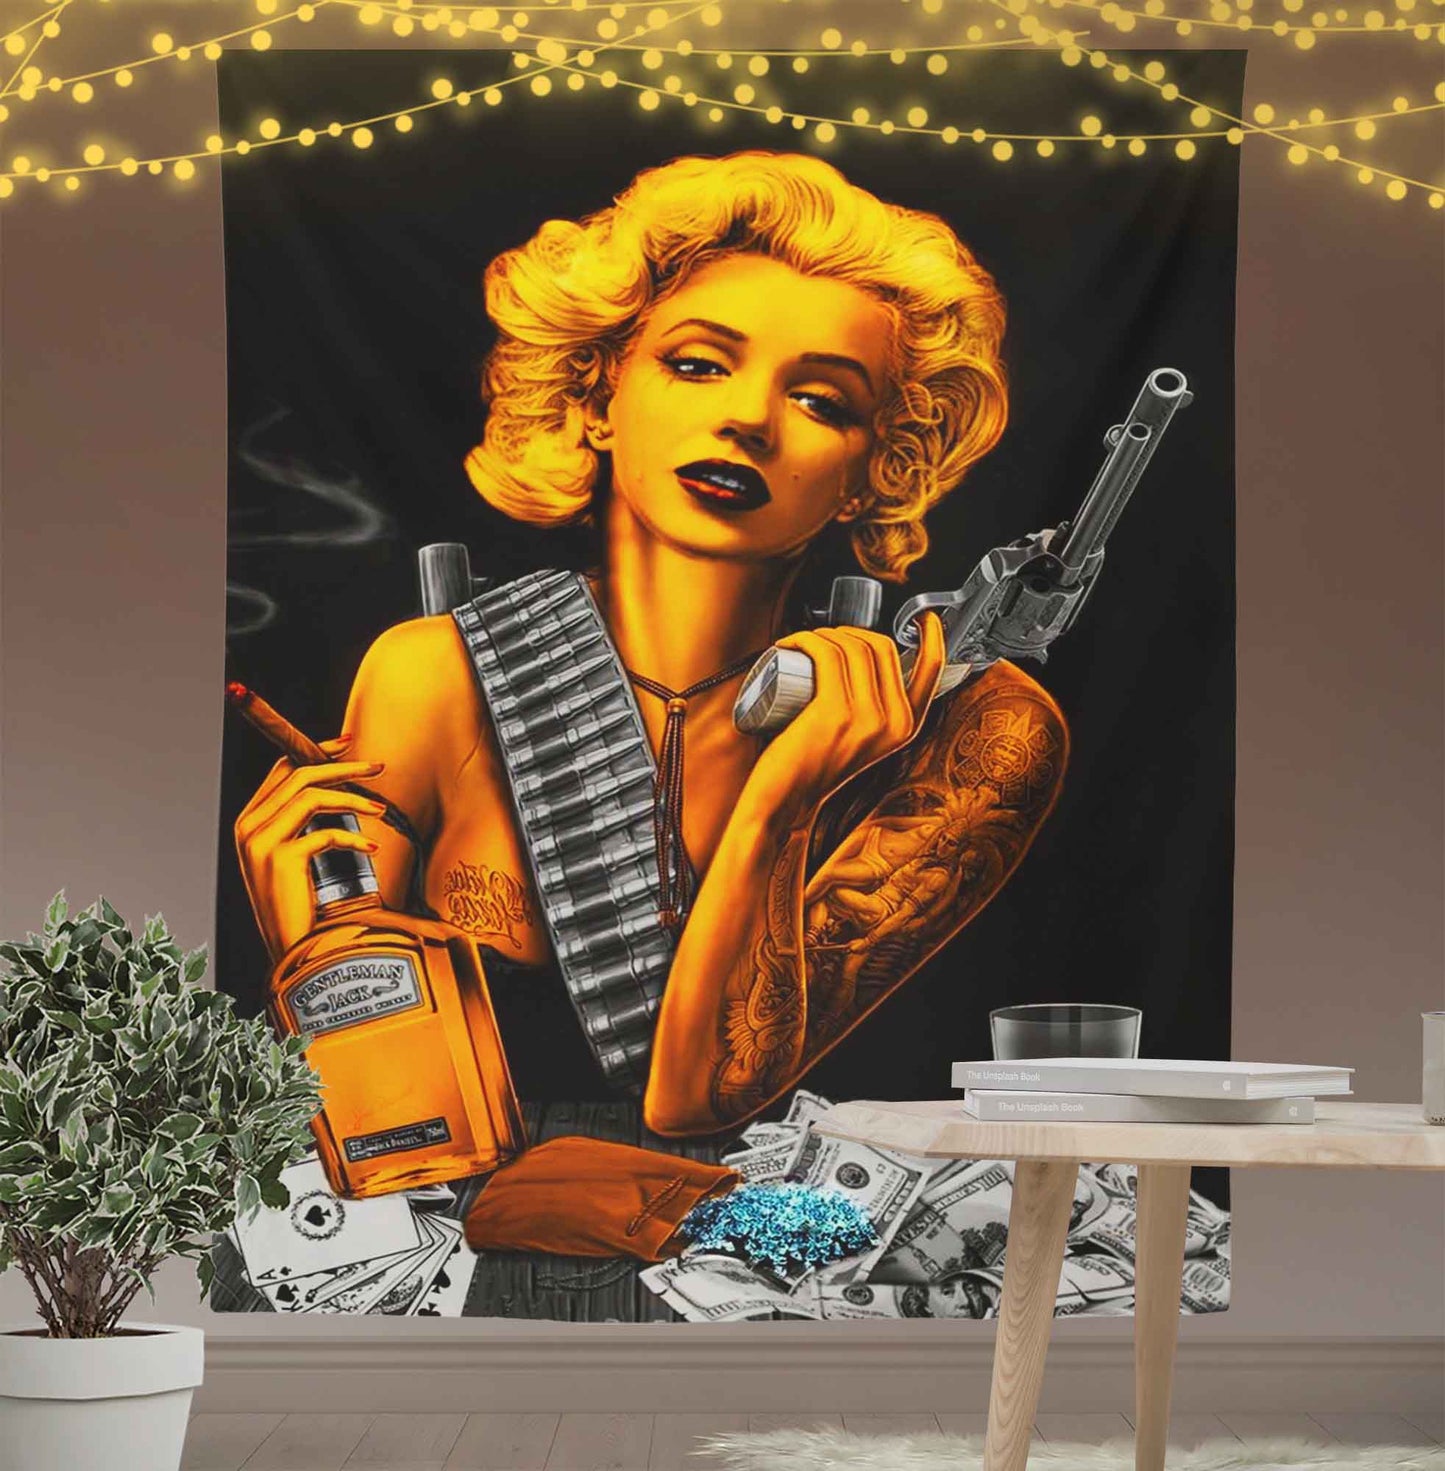 Marilyn Monroe With Gun Wall Art Tapestry